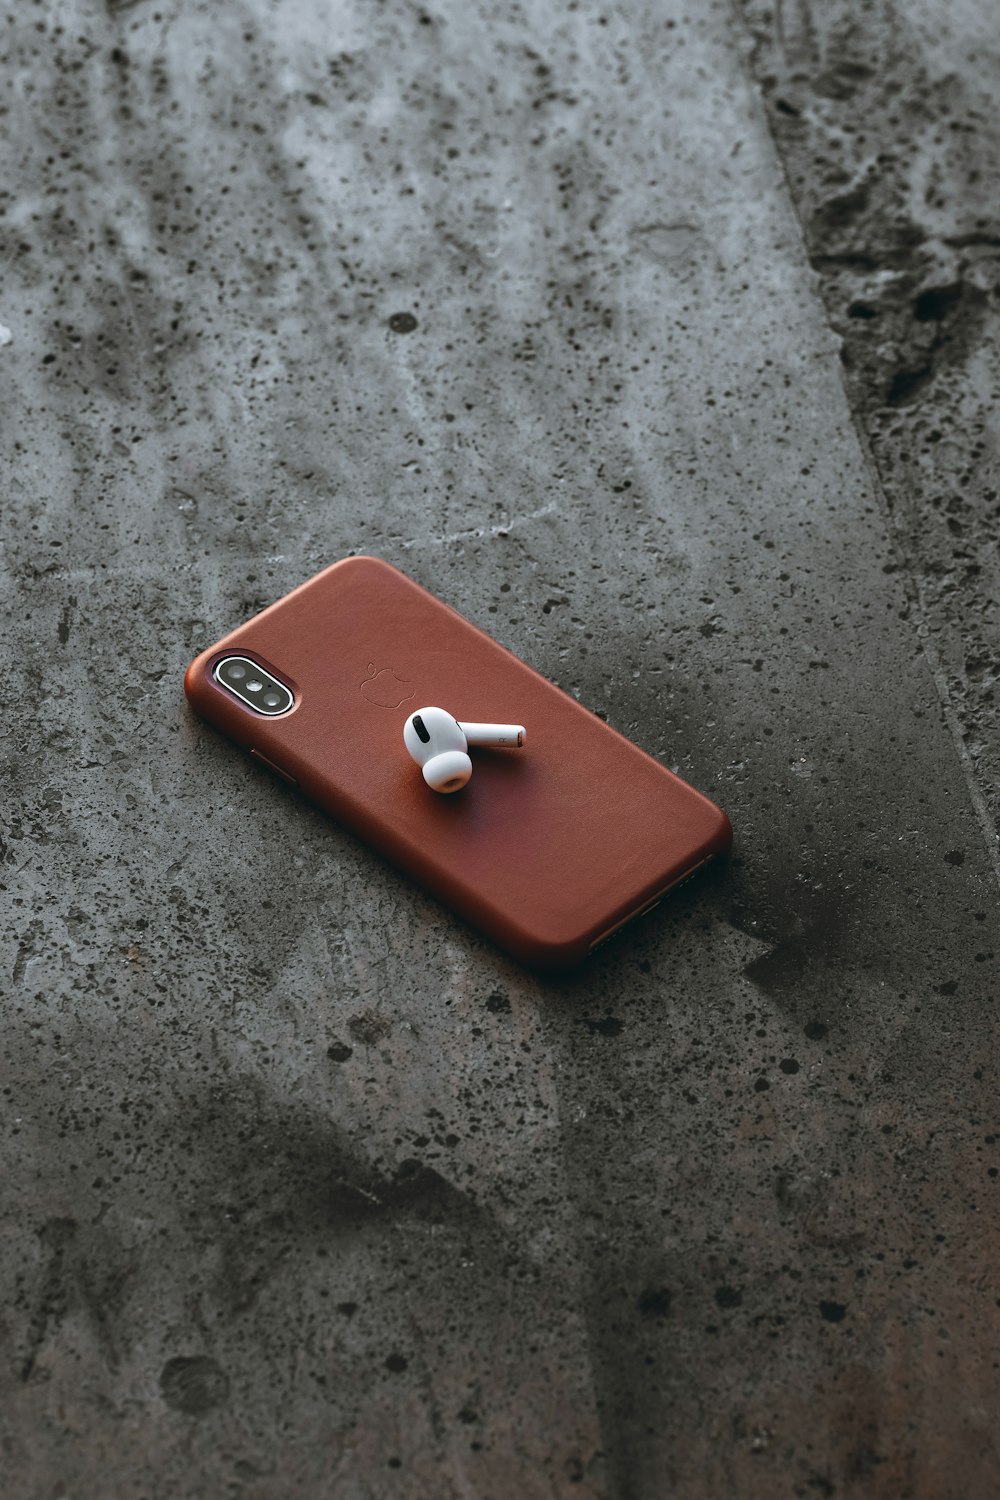 red iphone case on gray concrete floor